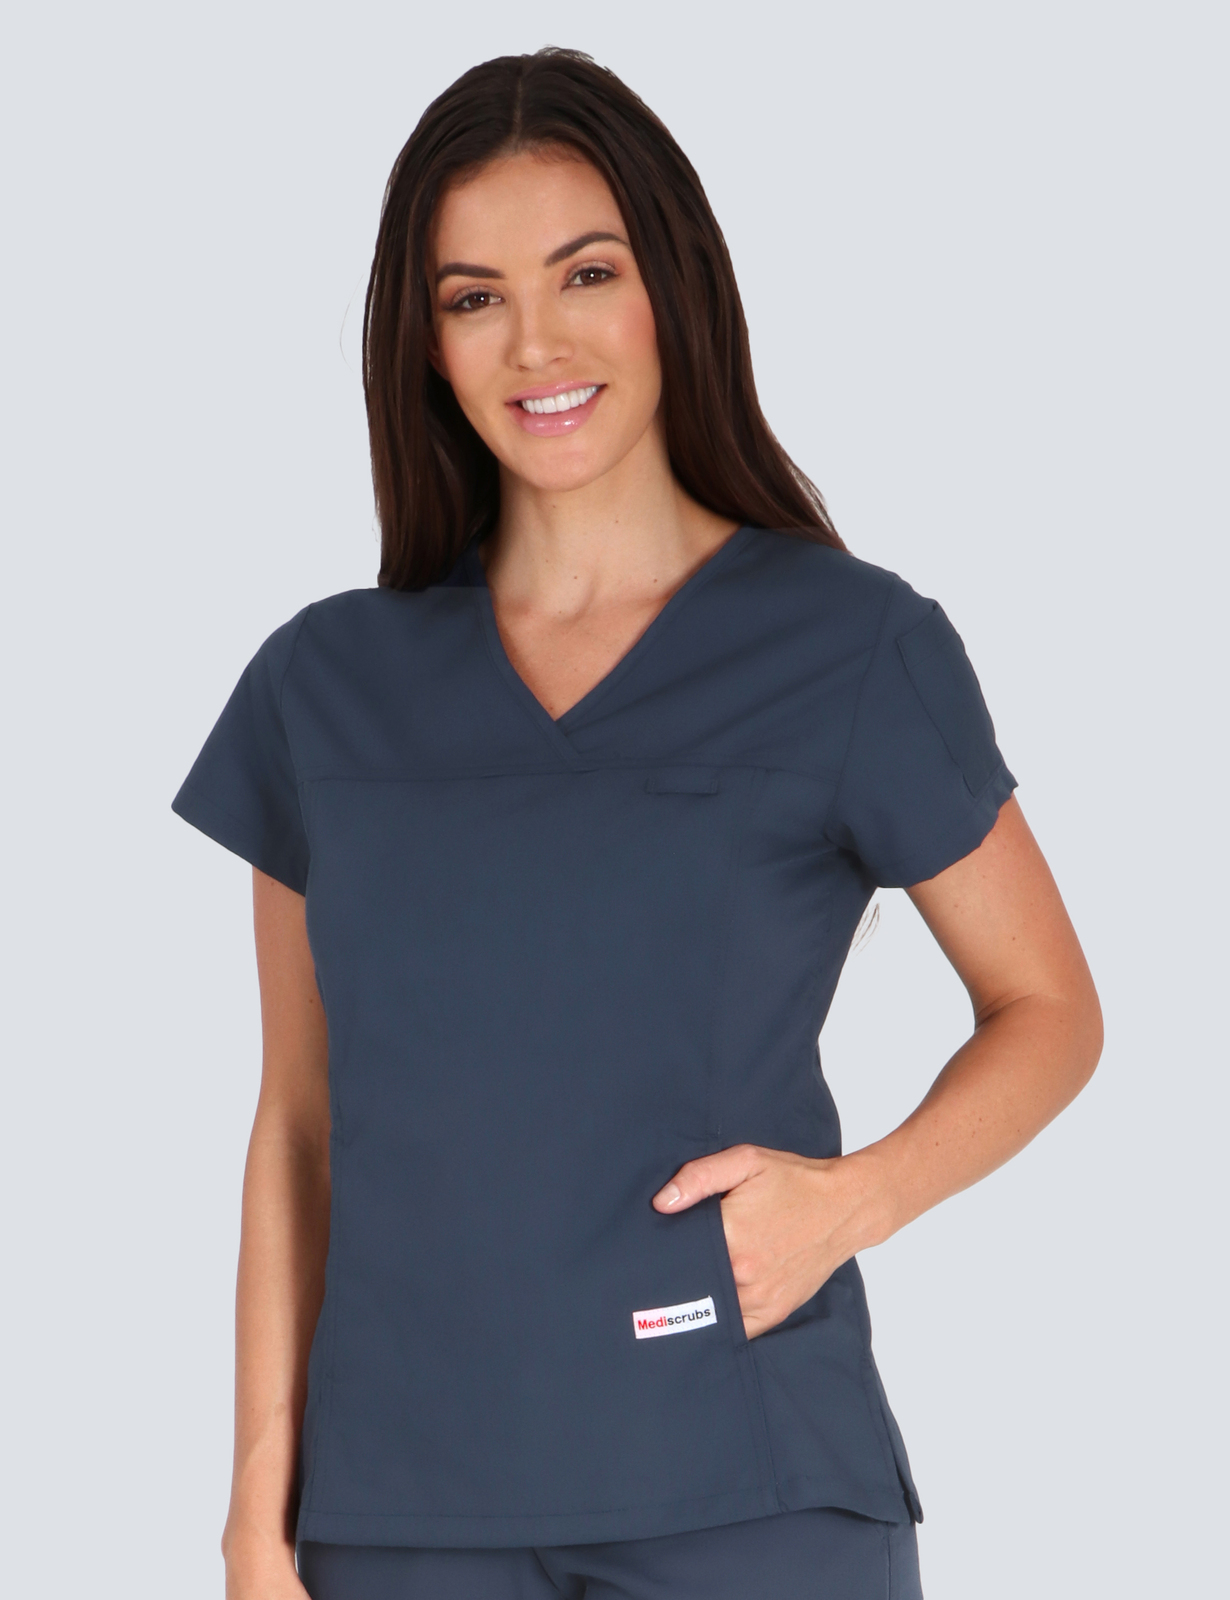 St Vincent's Hospital Emergency Department  Nurse Practitioner Uniform Top Only Bundle (Women's Fit Solid in Navy incl logos)